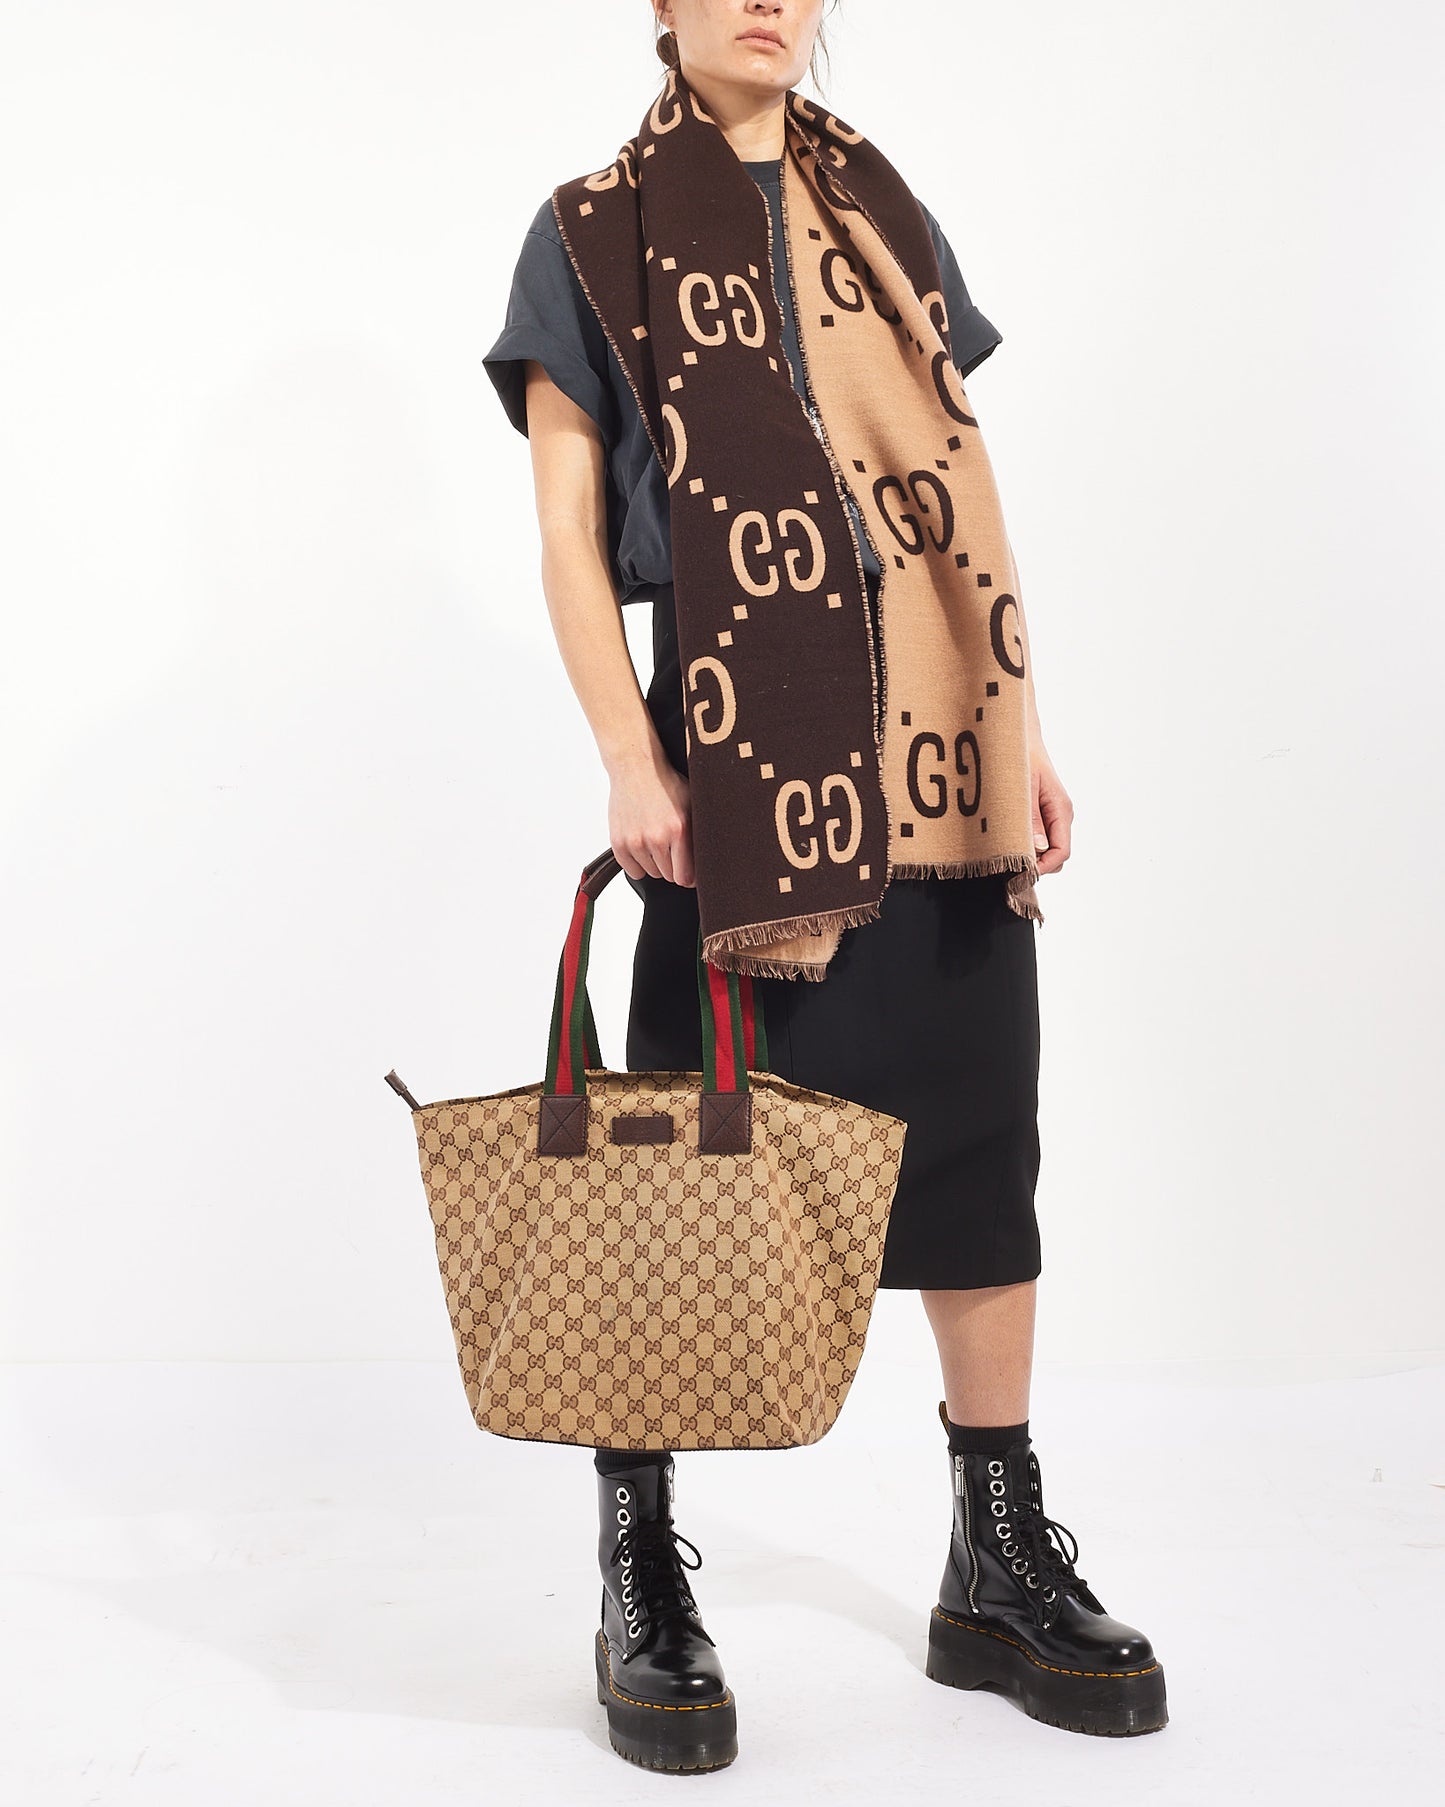 Gucci Beige/Brown Monogram GG Canvas Large Web Handle Tote Bag